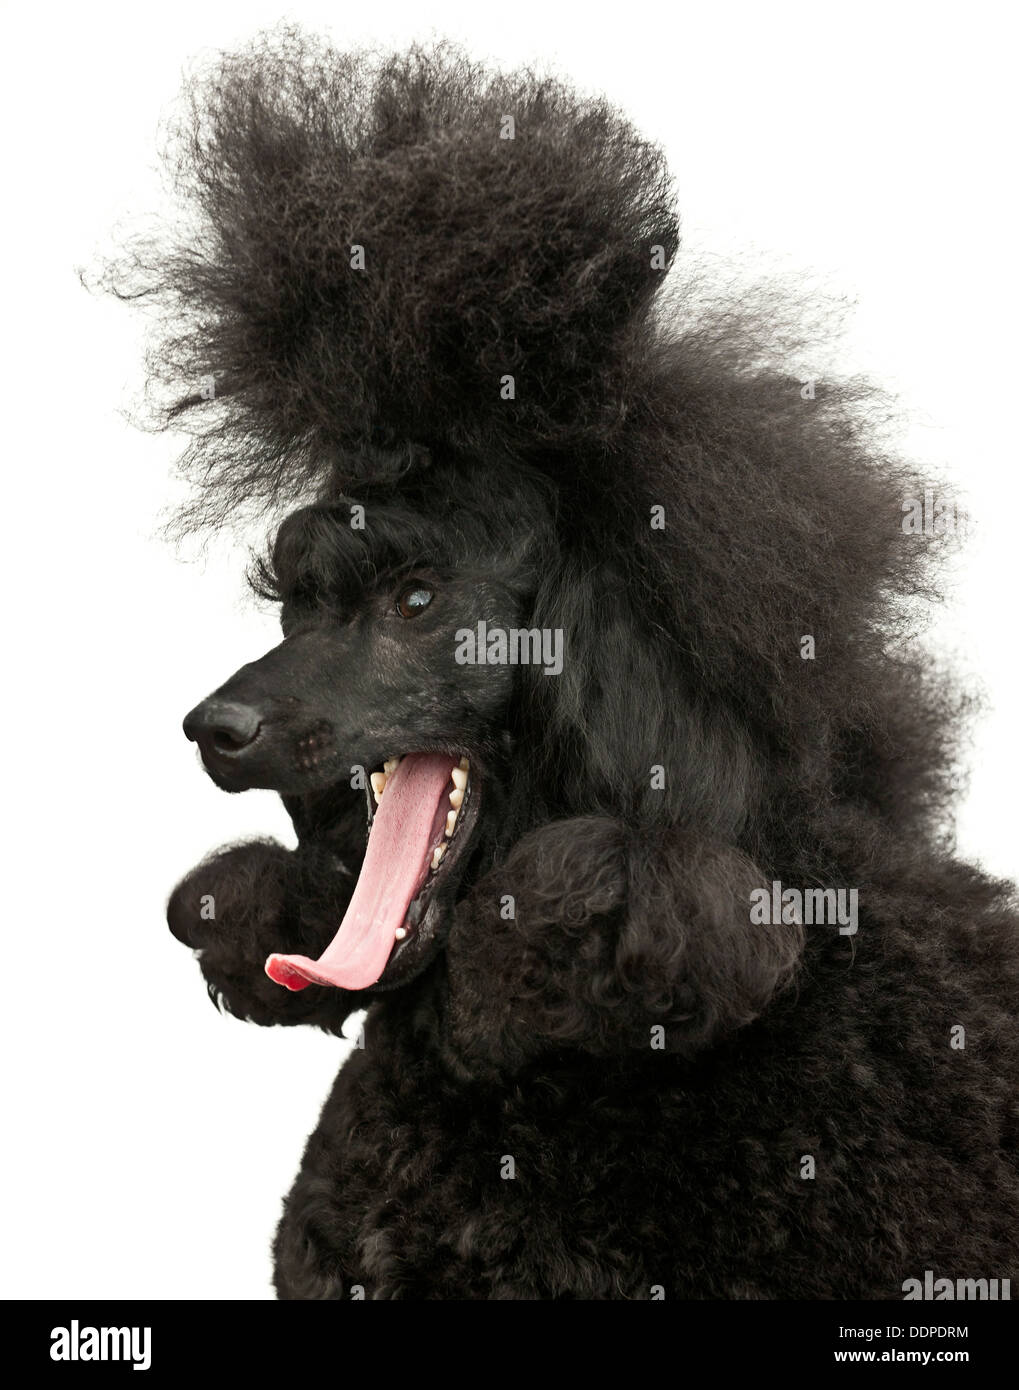 black poodle dog portrait Stock Photo